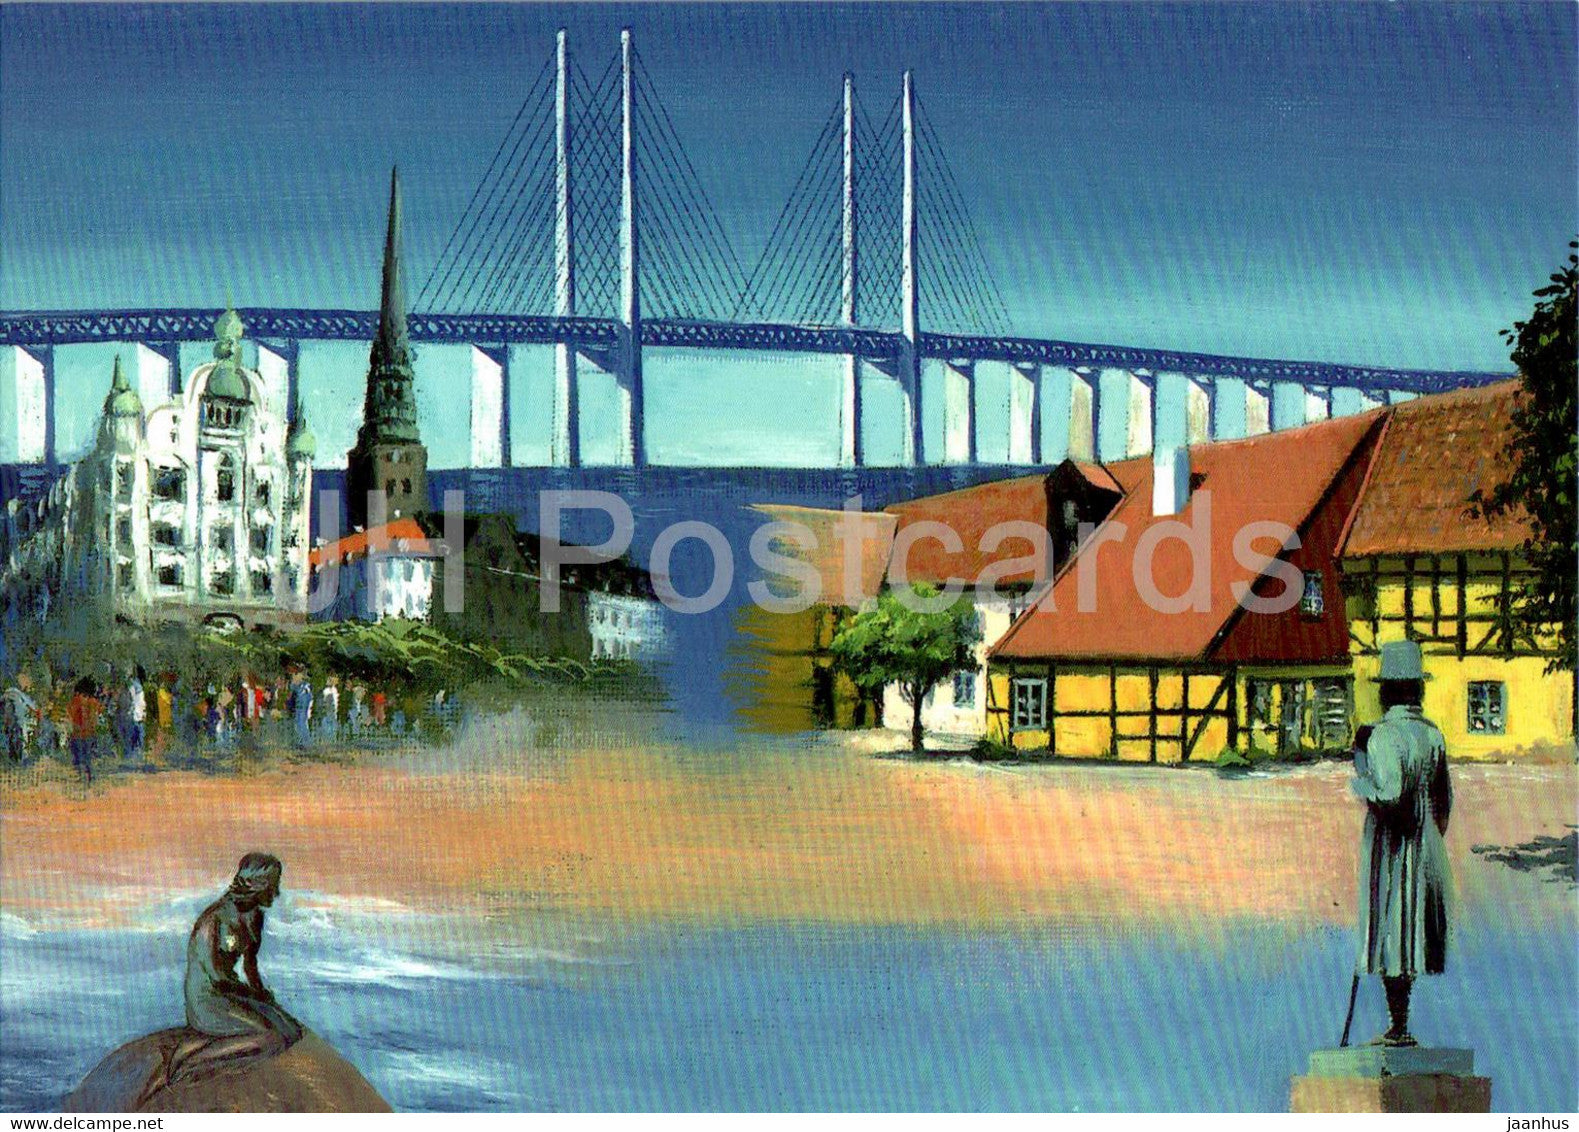 Denmark - Little Mermaid - bridge - illustration - Denmark - unused - JH Postcards